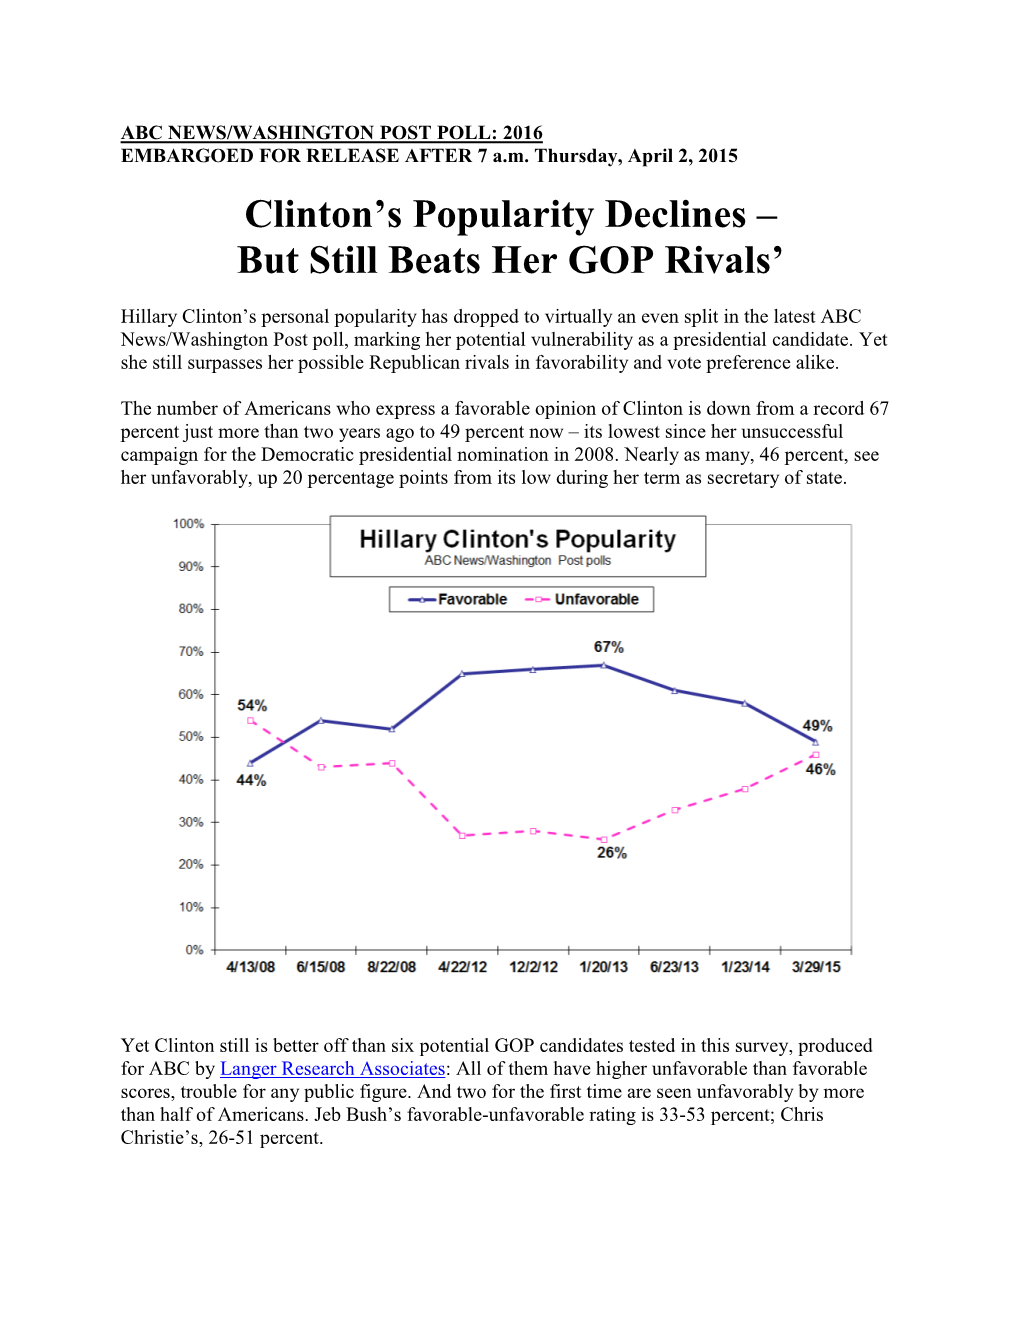 Clinton's Popularity Declines – but Still Beats Her GOP Rivals'